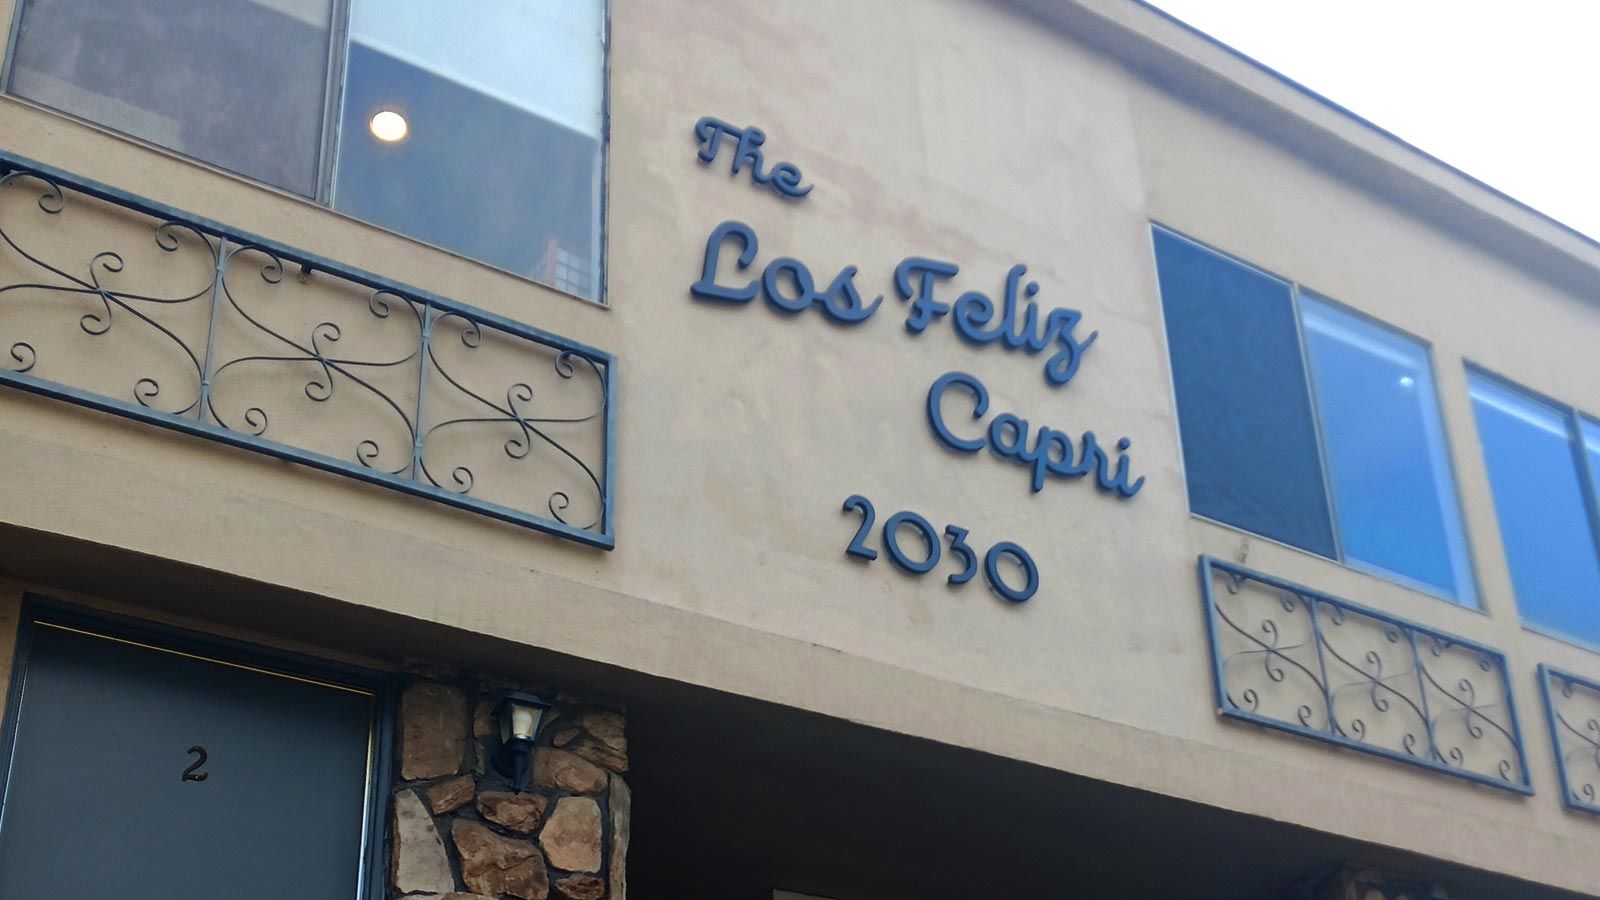 The Los Feliz Capri building sign for branding